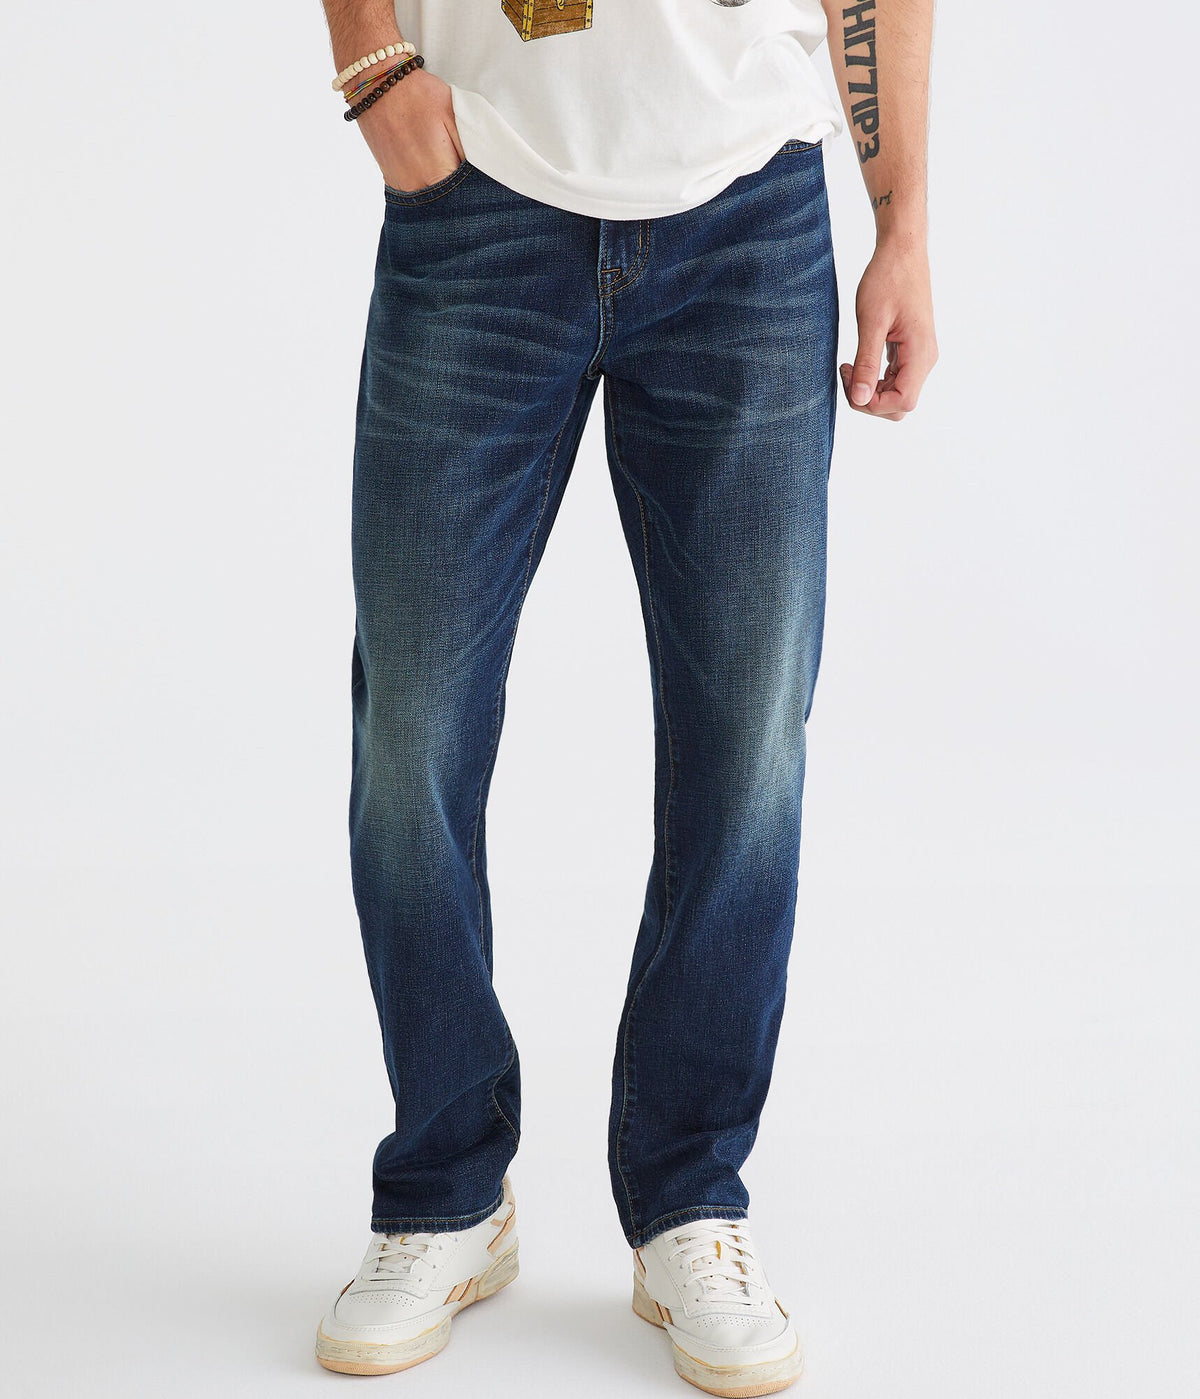 Aeropostale Mens' Athletic Straight Premium Air Jean - Blue - Size 31X32 - Cotton - Teen Fashion & Clothing Dark Wash